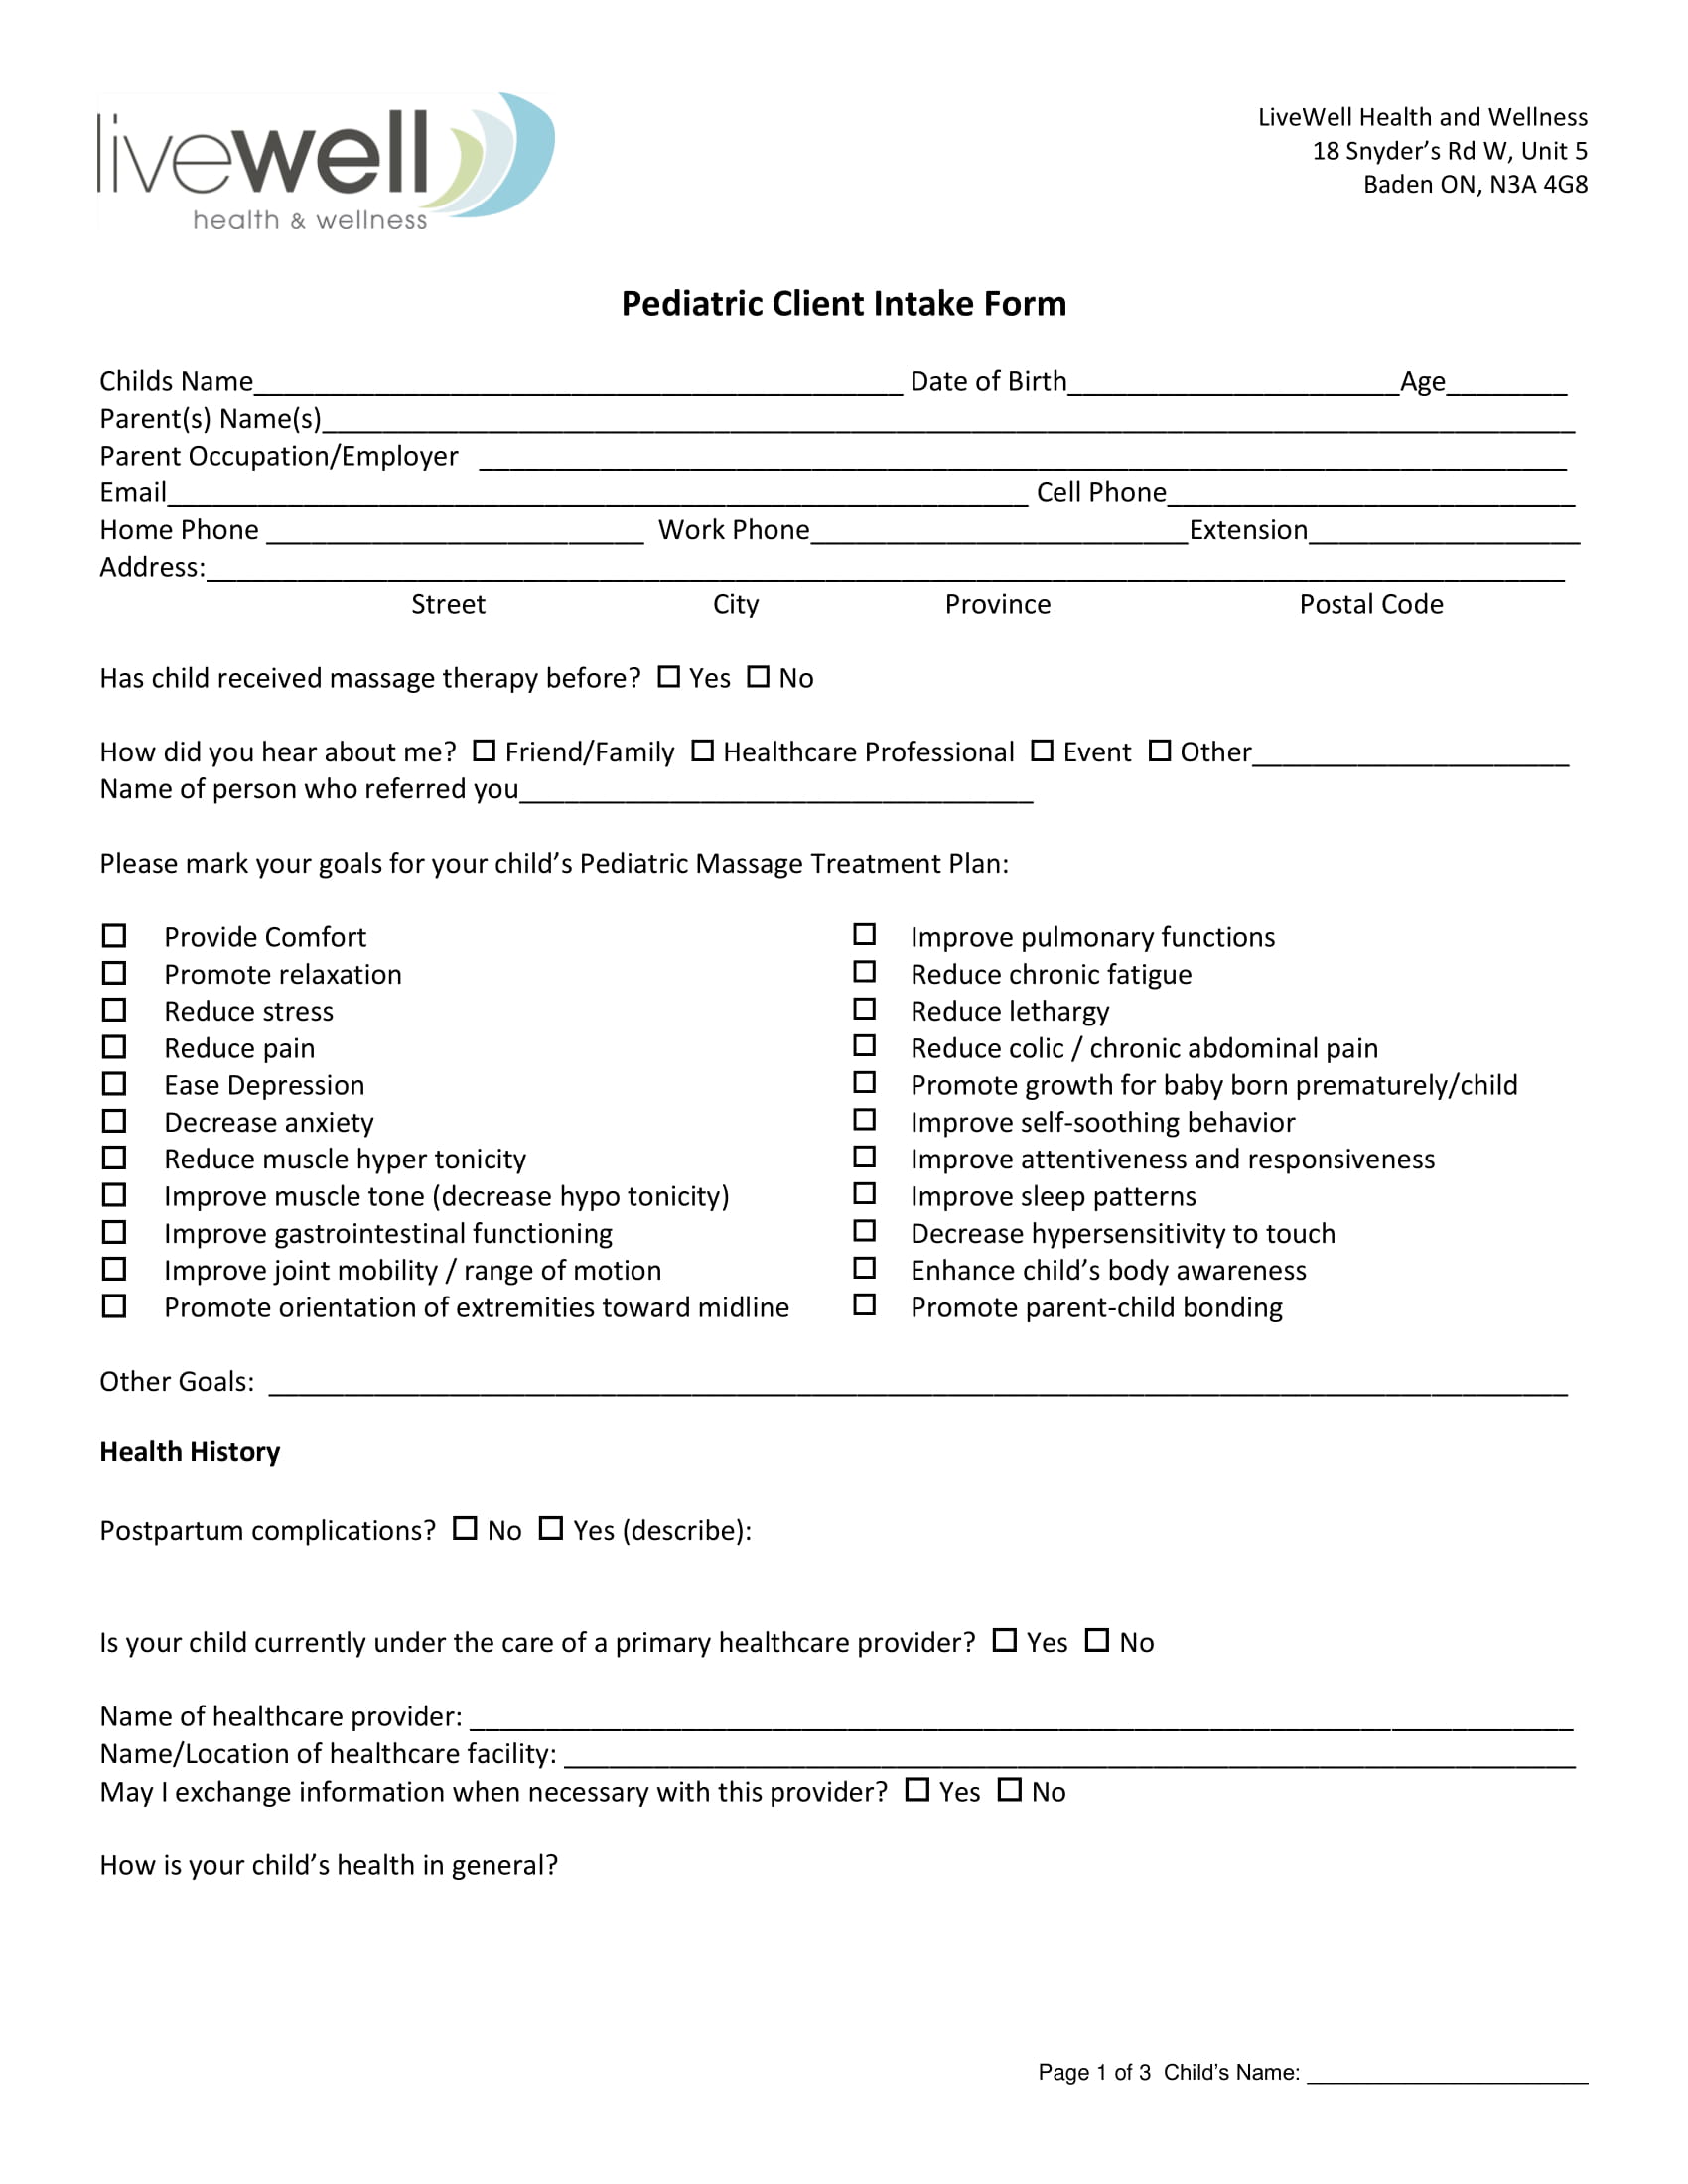 pediatric client intake form 1